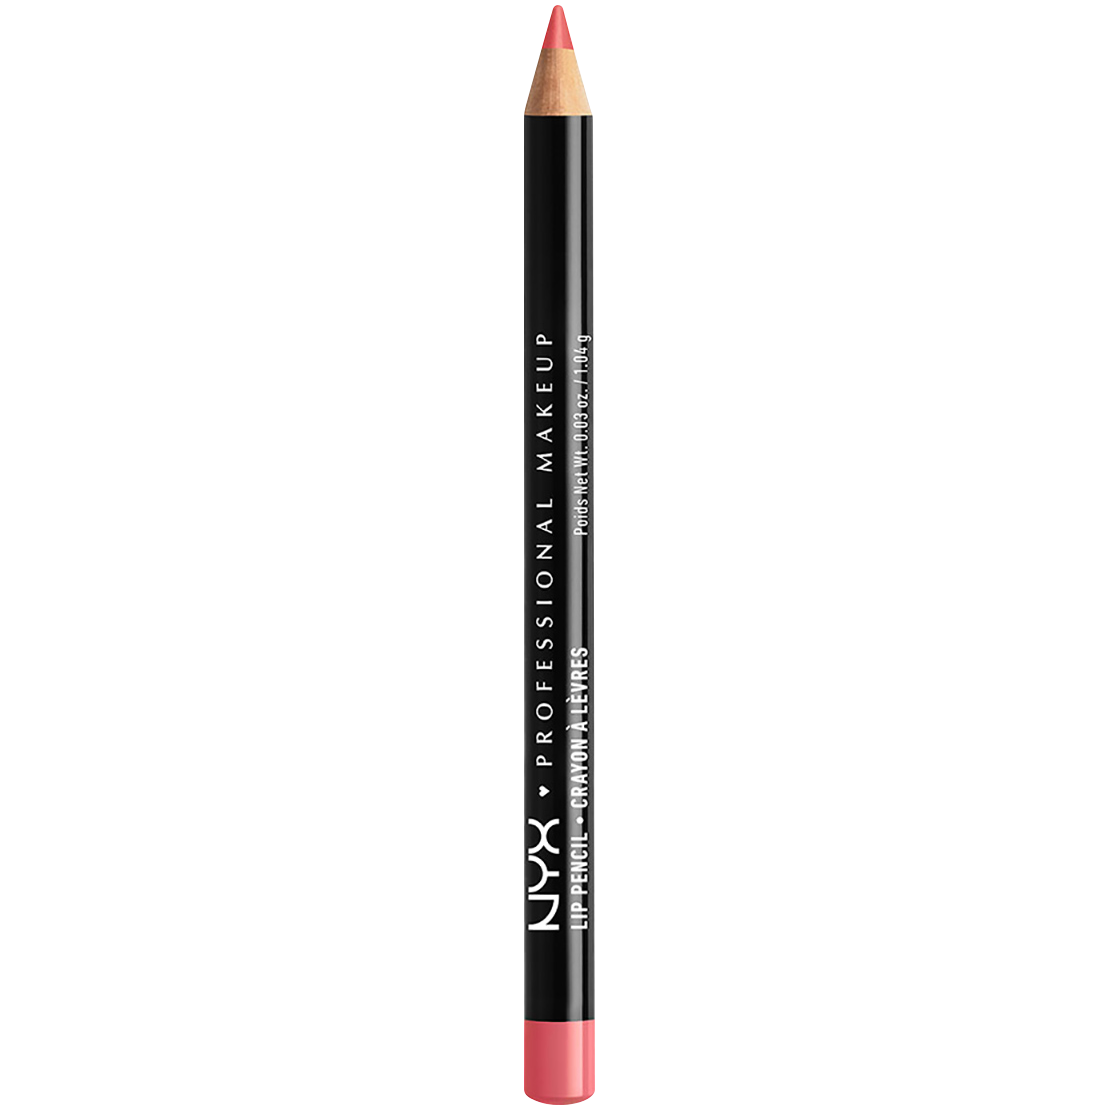 Ярко-красный карандаш для губ Nyx Professional Makeup Slide On, 1 гр nyx lip pencil slim 20 espresso 0 03 oz 1 04 g